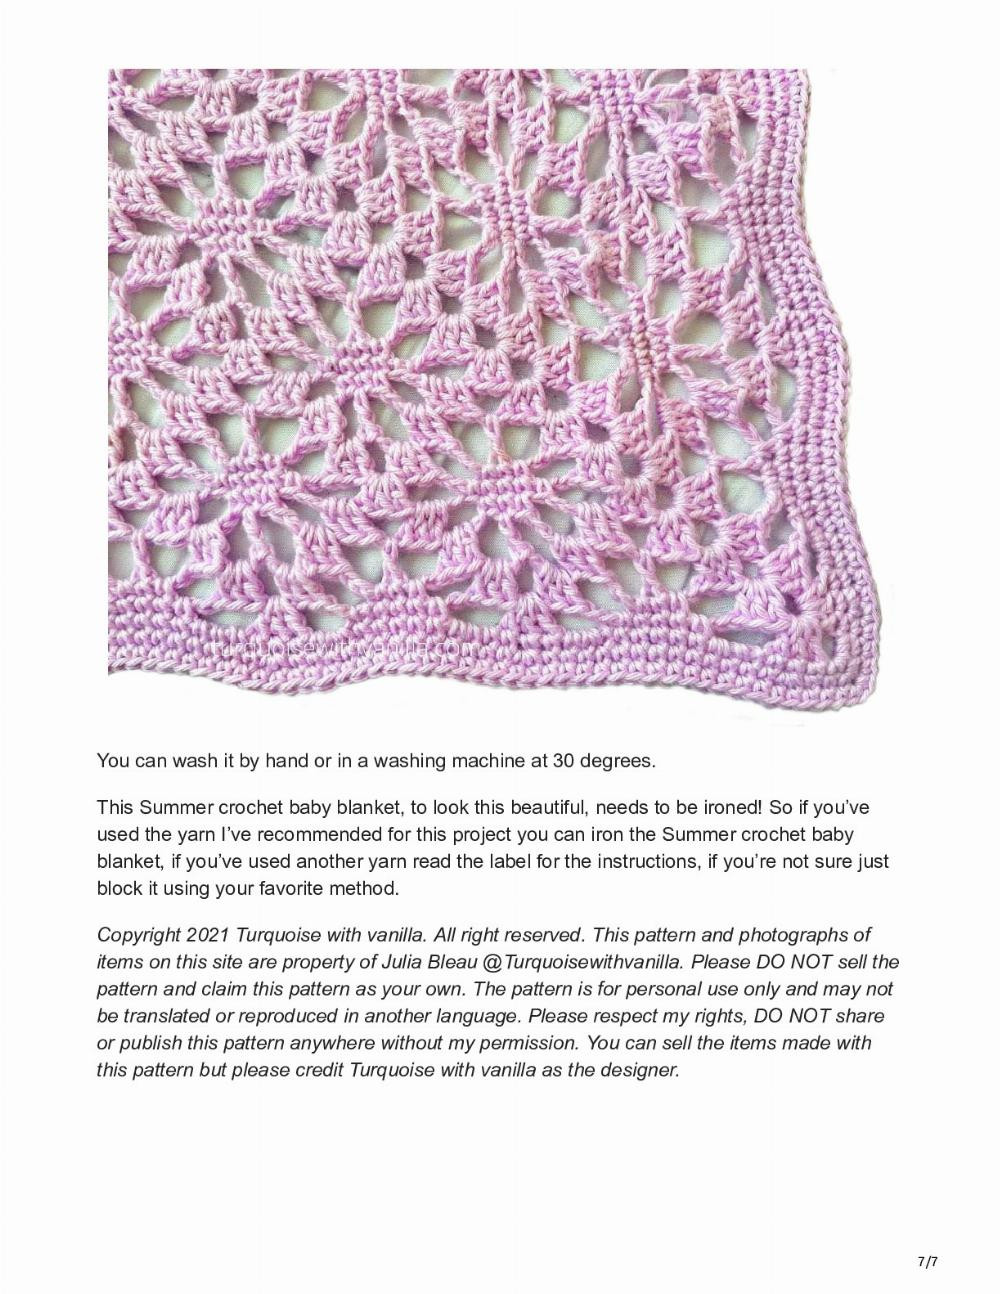 Summer crochet baby blanket